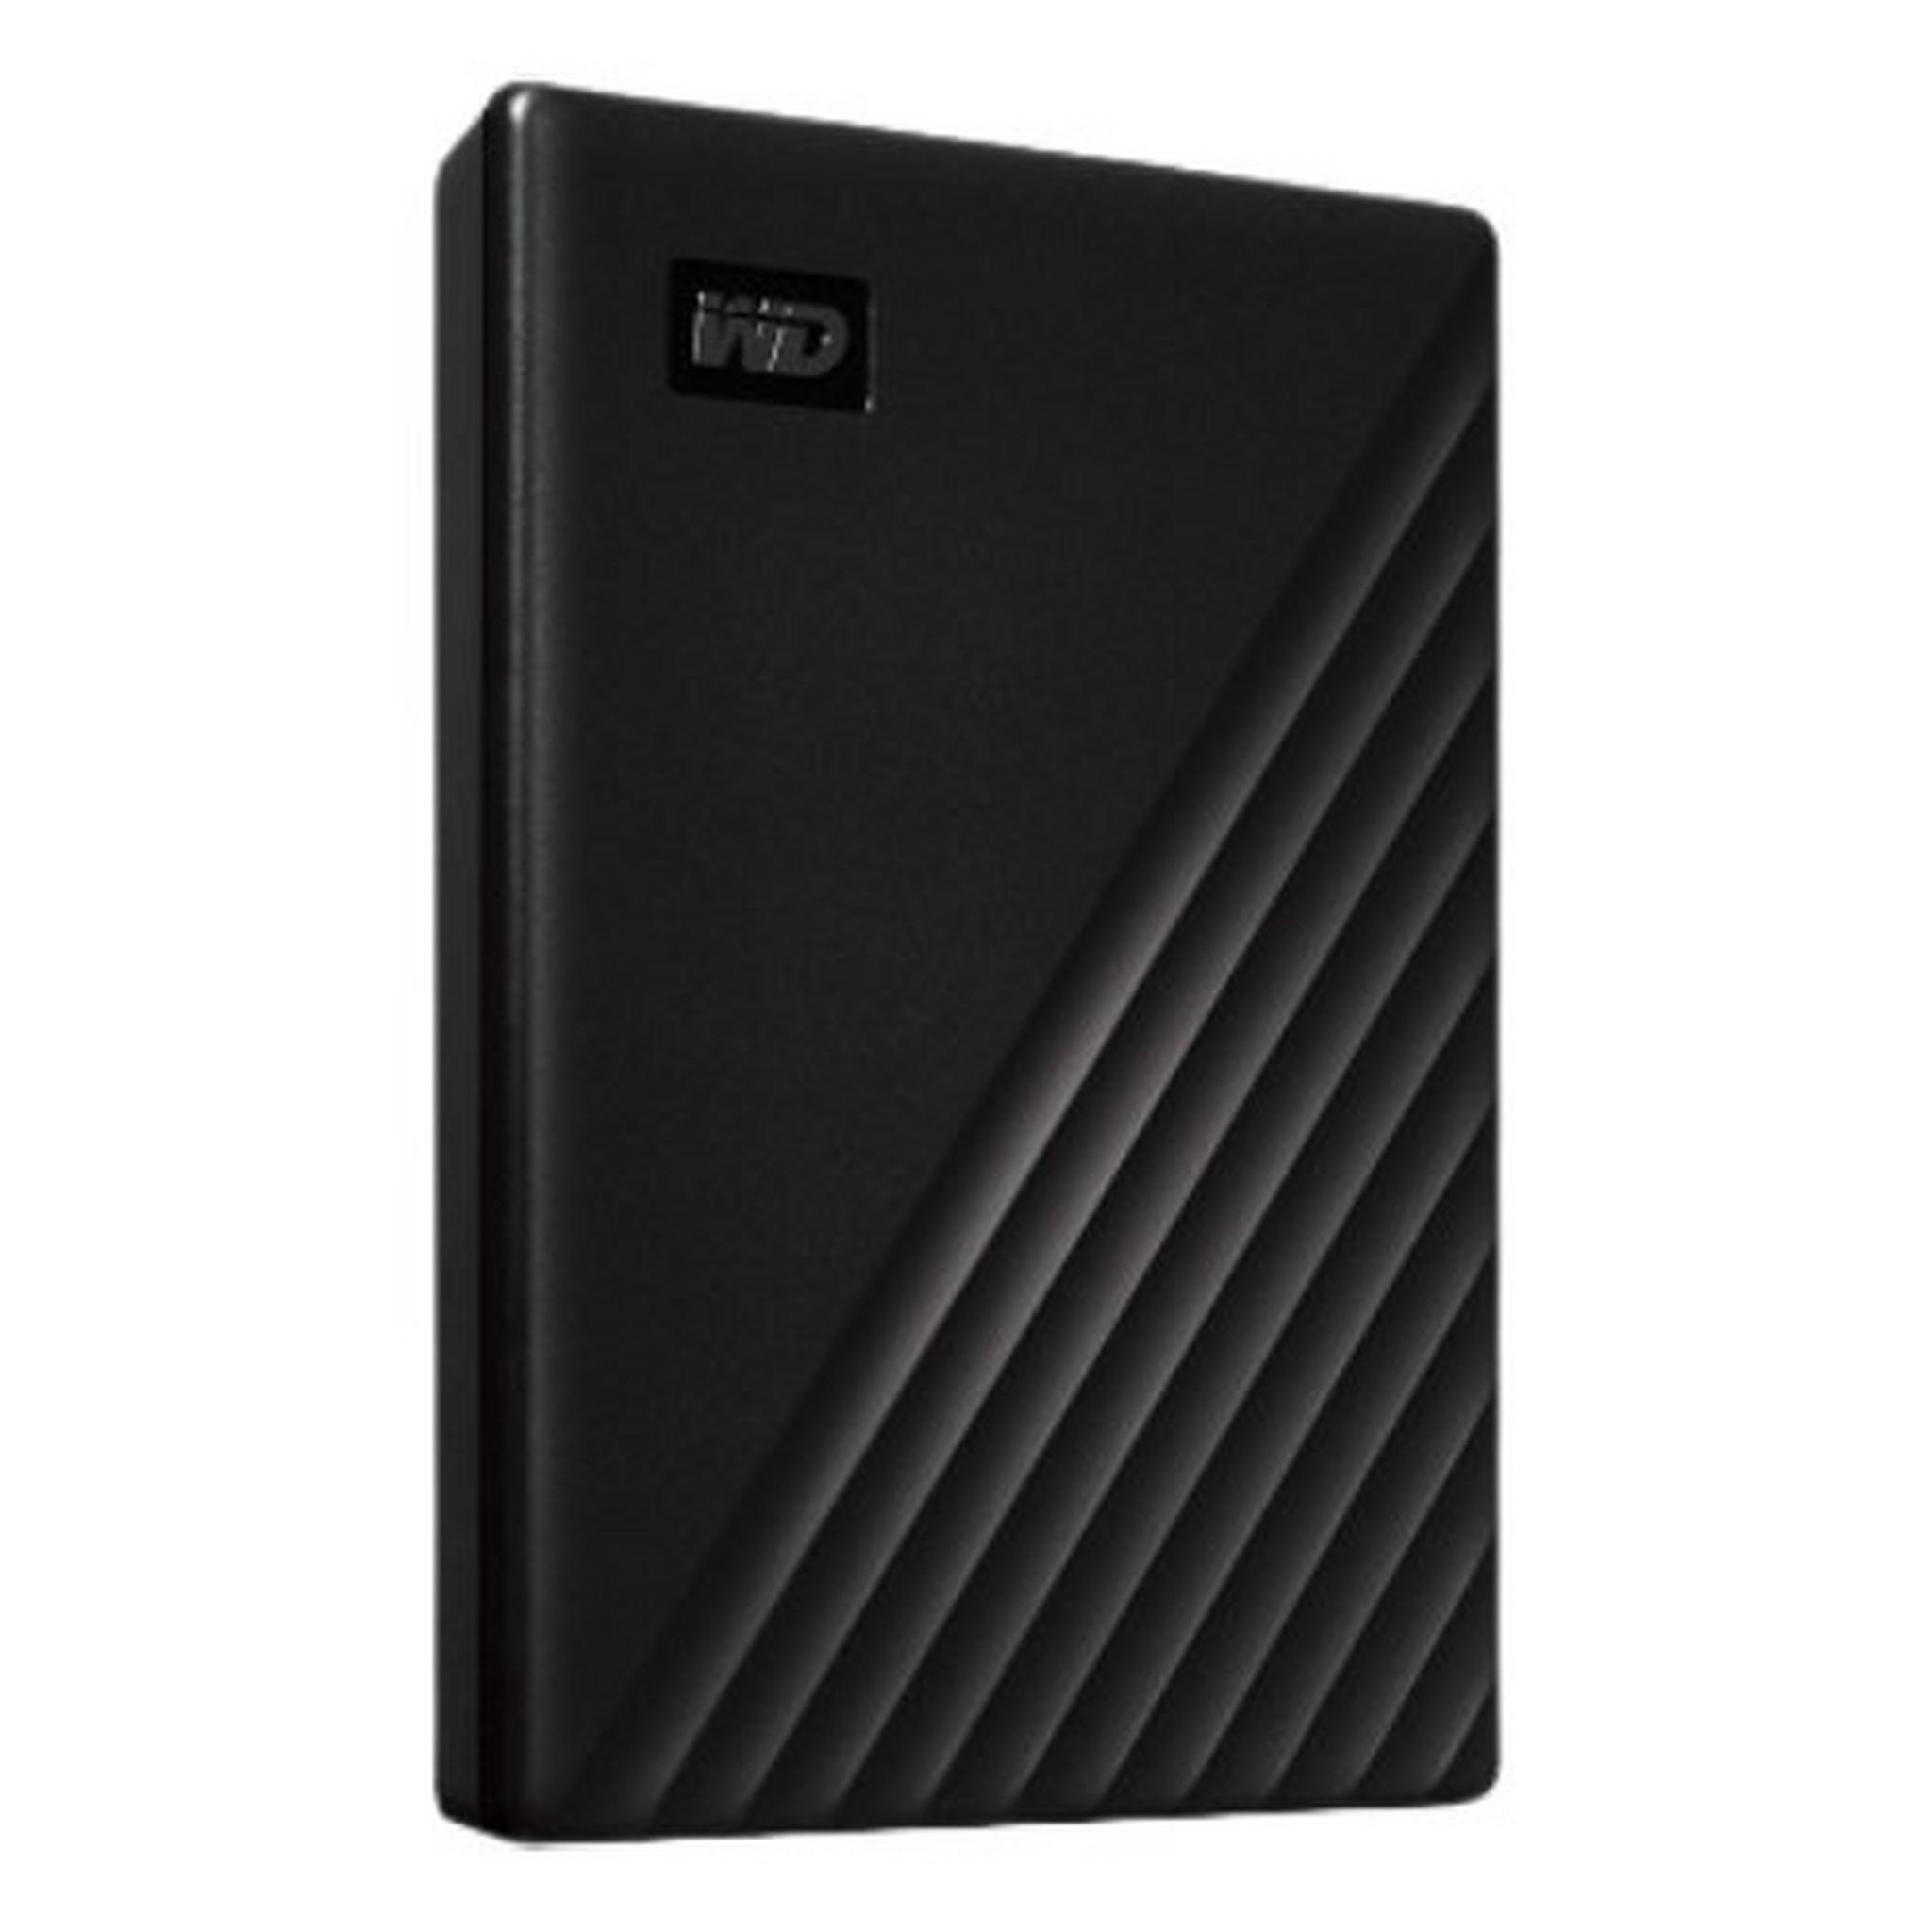 WD 1TB My Passport Portable External Hard Drive - Black